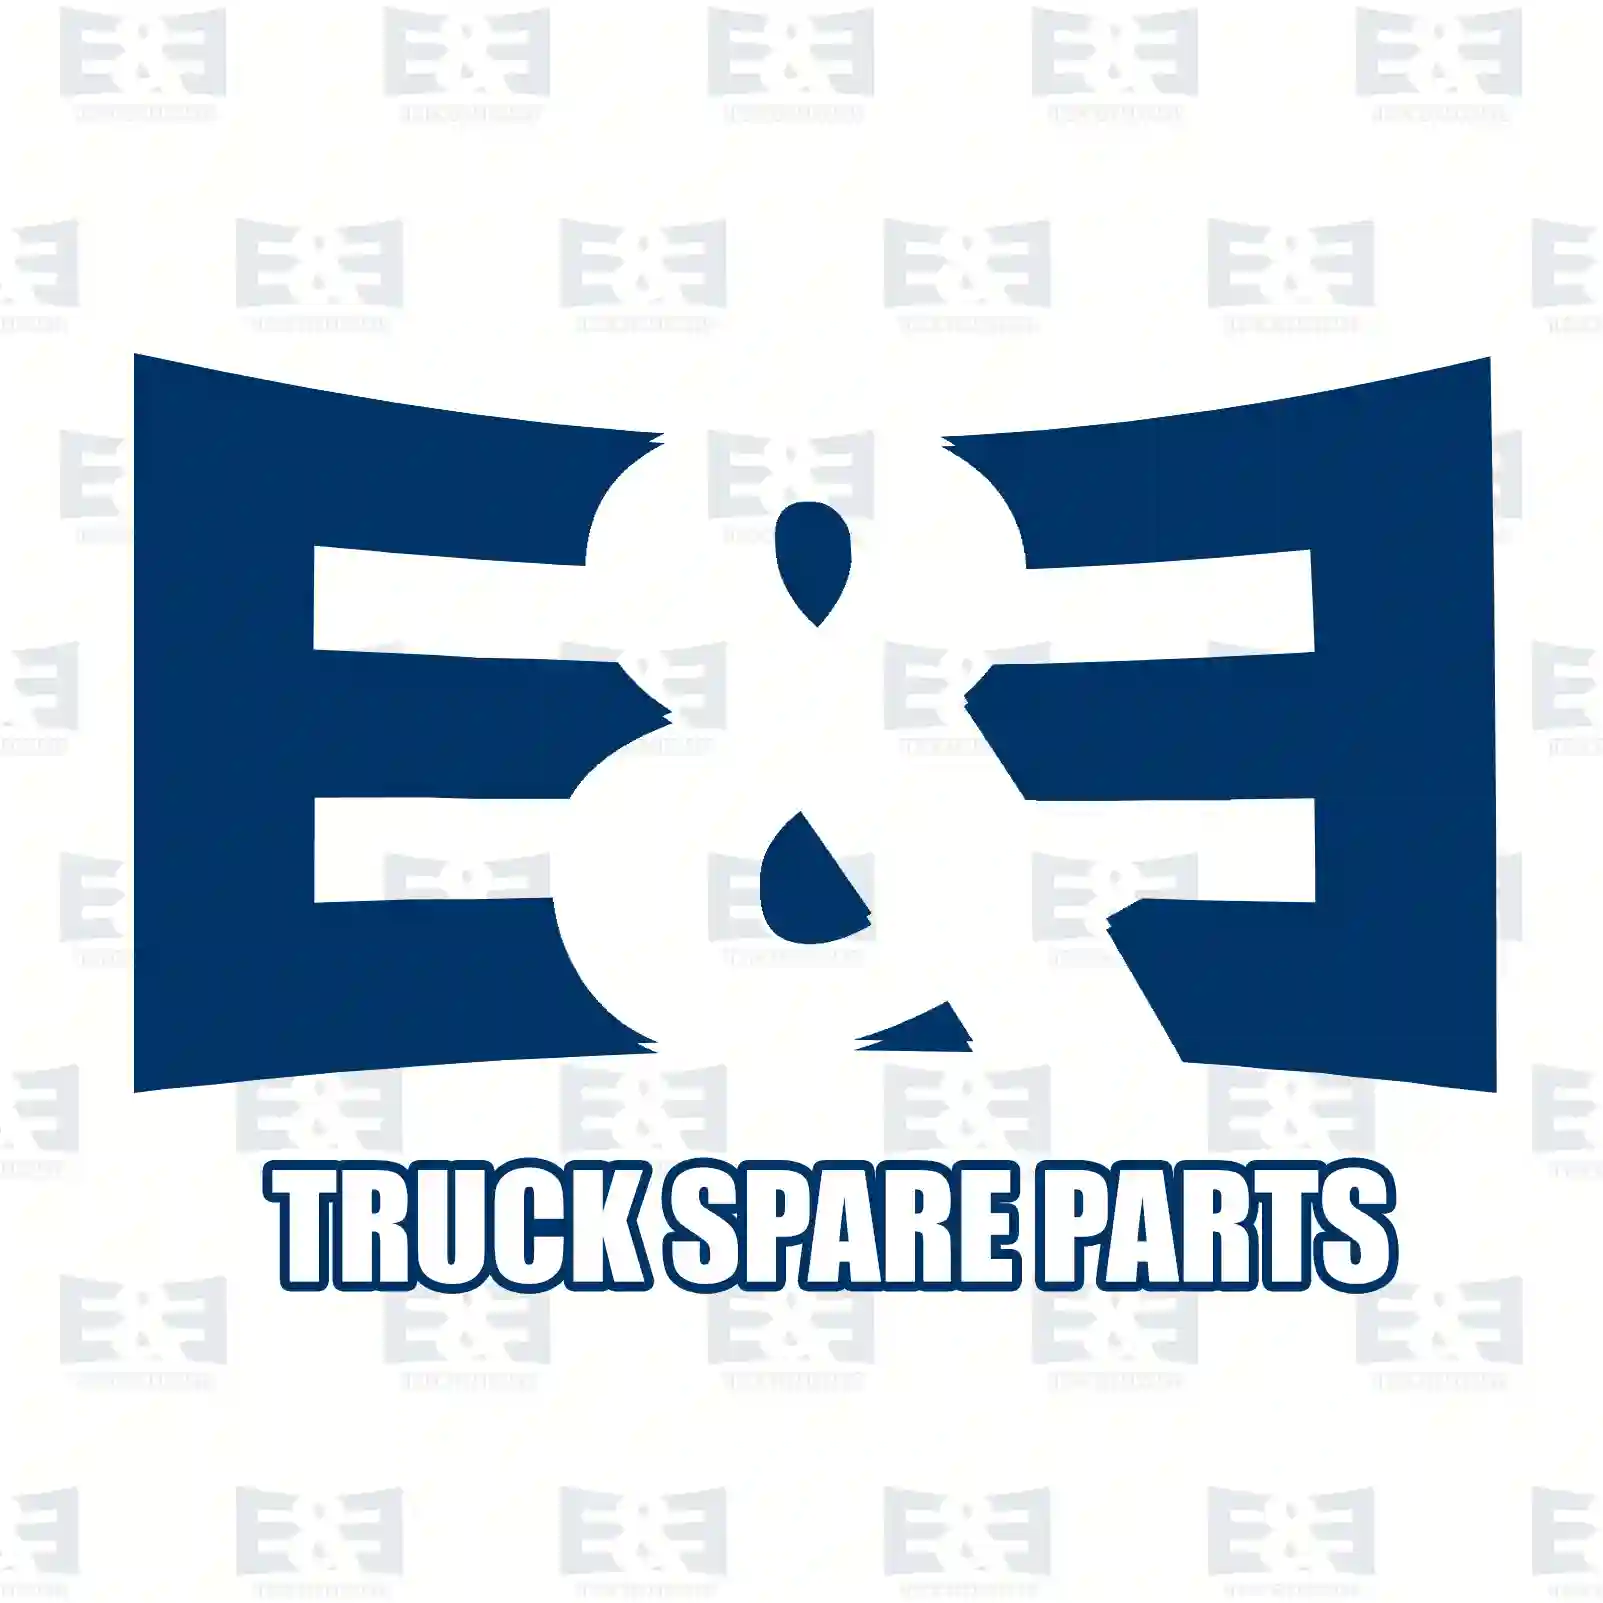  Clutch Kit (Cover & Disc) Clutch cover, EE No 2E2289224 ,  oem no:81303050198, 51303050003, 81303050198, 81303050225, 81303050233, 81303059198, 81303059225, 81303059233, 81303050198, 81303050198 E&E Truck Spare Parts | Truck Spare Parts, Auotomotive Spare Parts